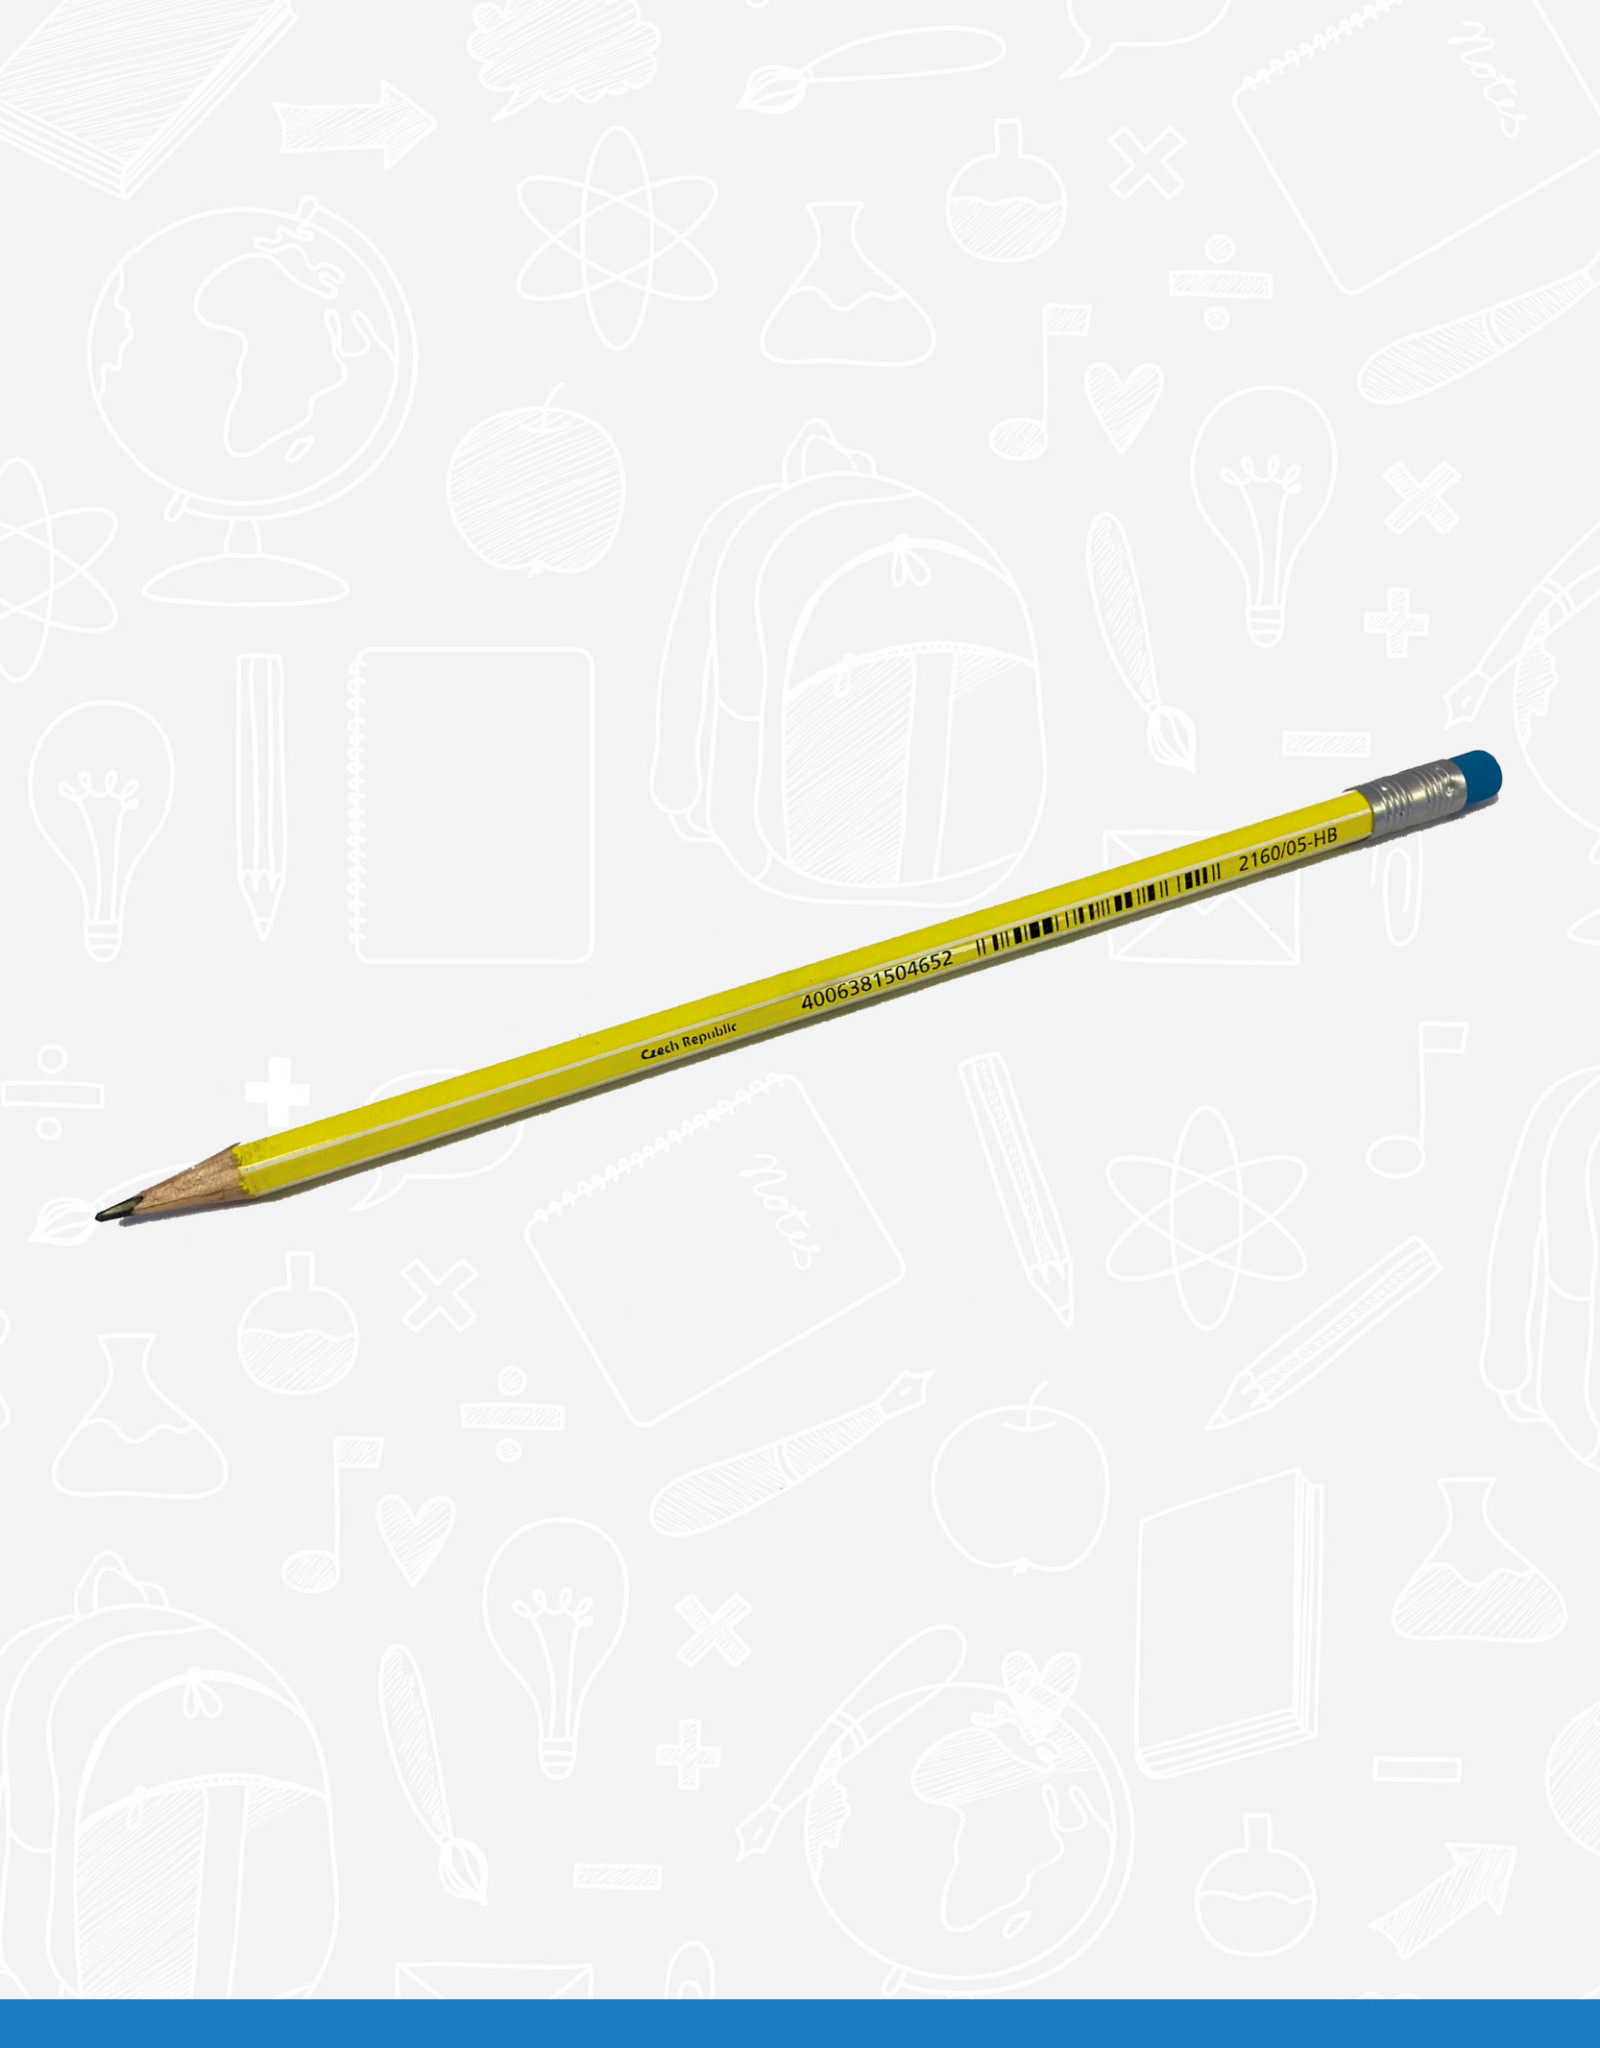 Stabilo Stabilo Eraser Tip Pencil (2160/05-HB)